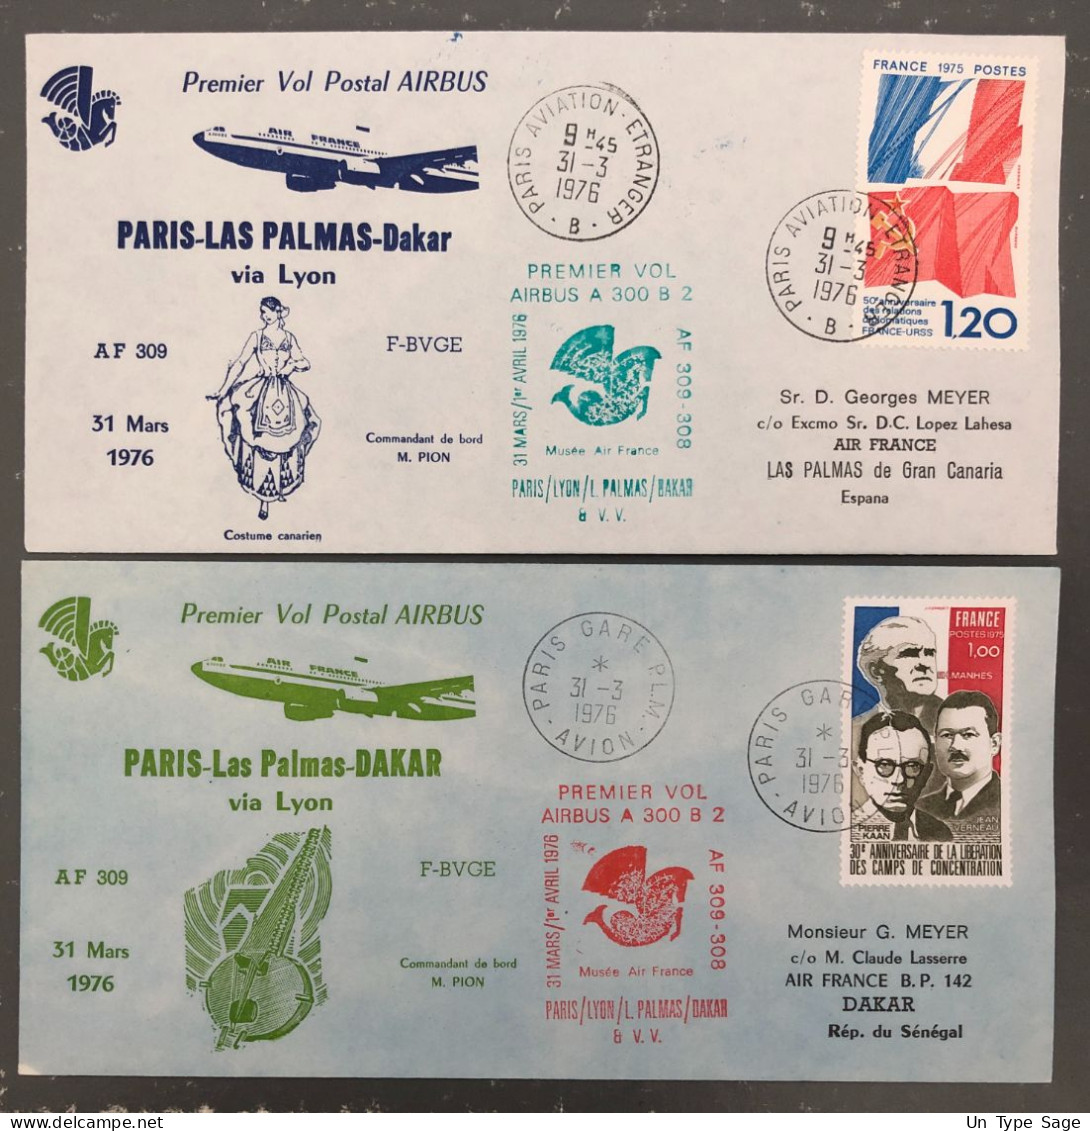 France, Premier Vol (Air France) Paris, Las Palmas, Dakar 31.3.1976 - 2 Enveloppes - (B1517) - Primeros Vuelos